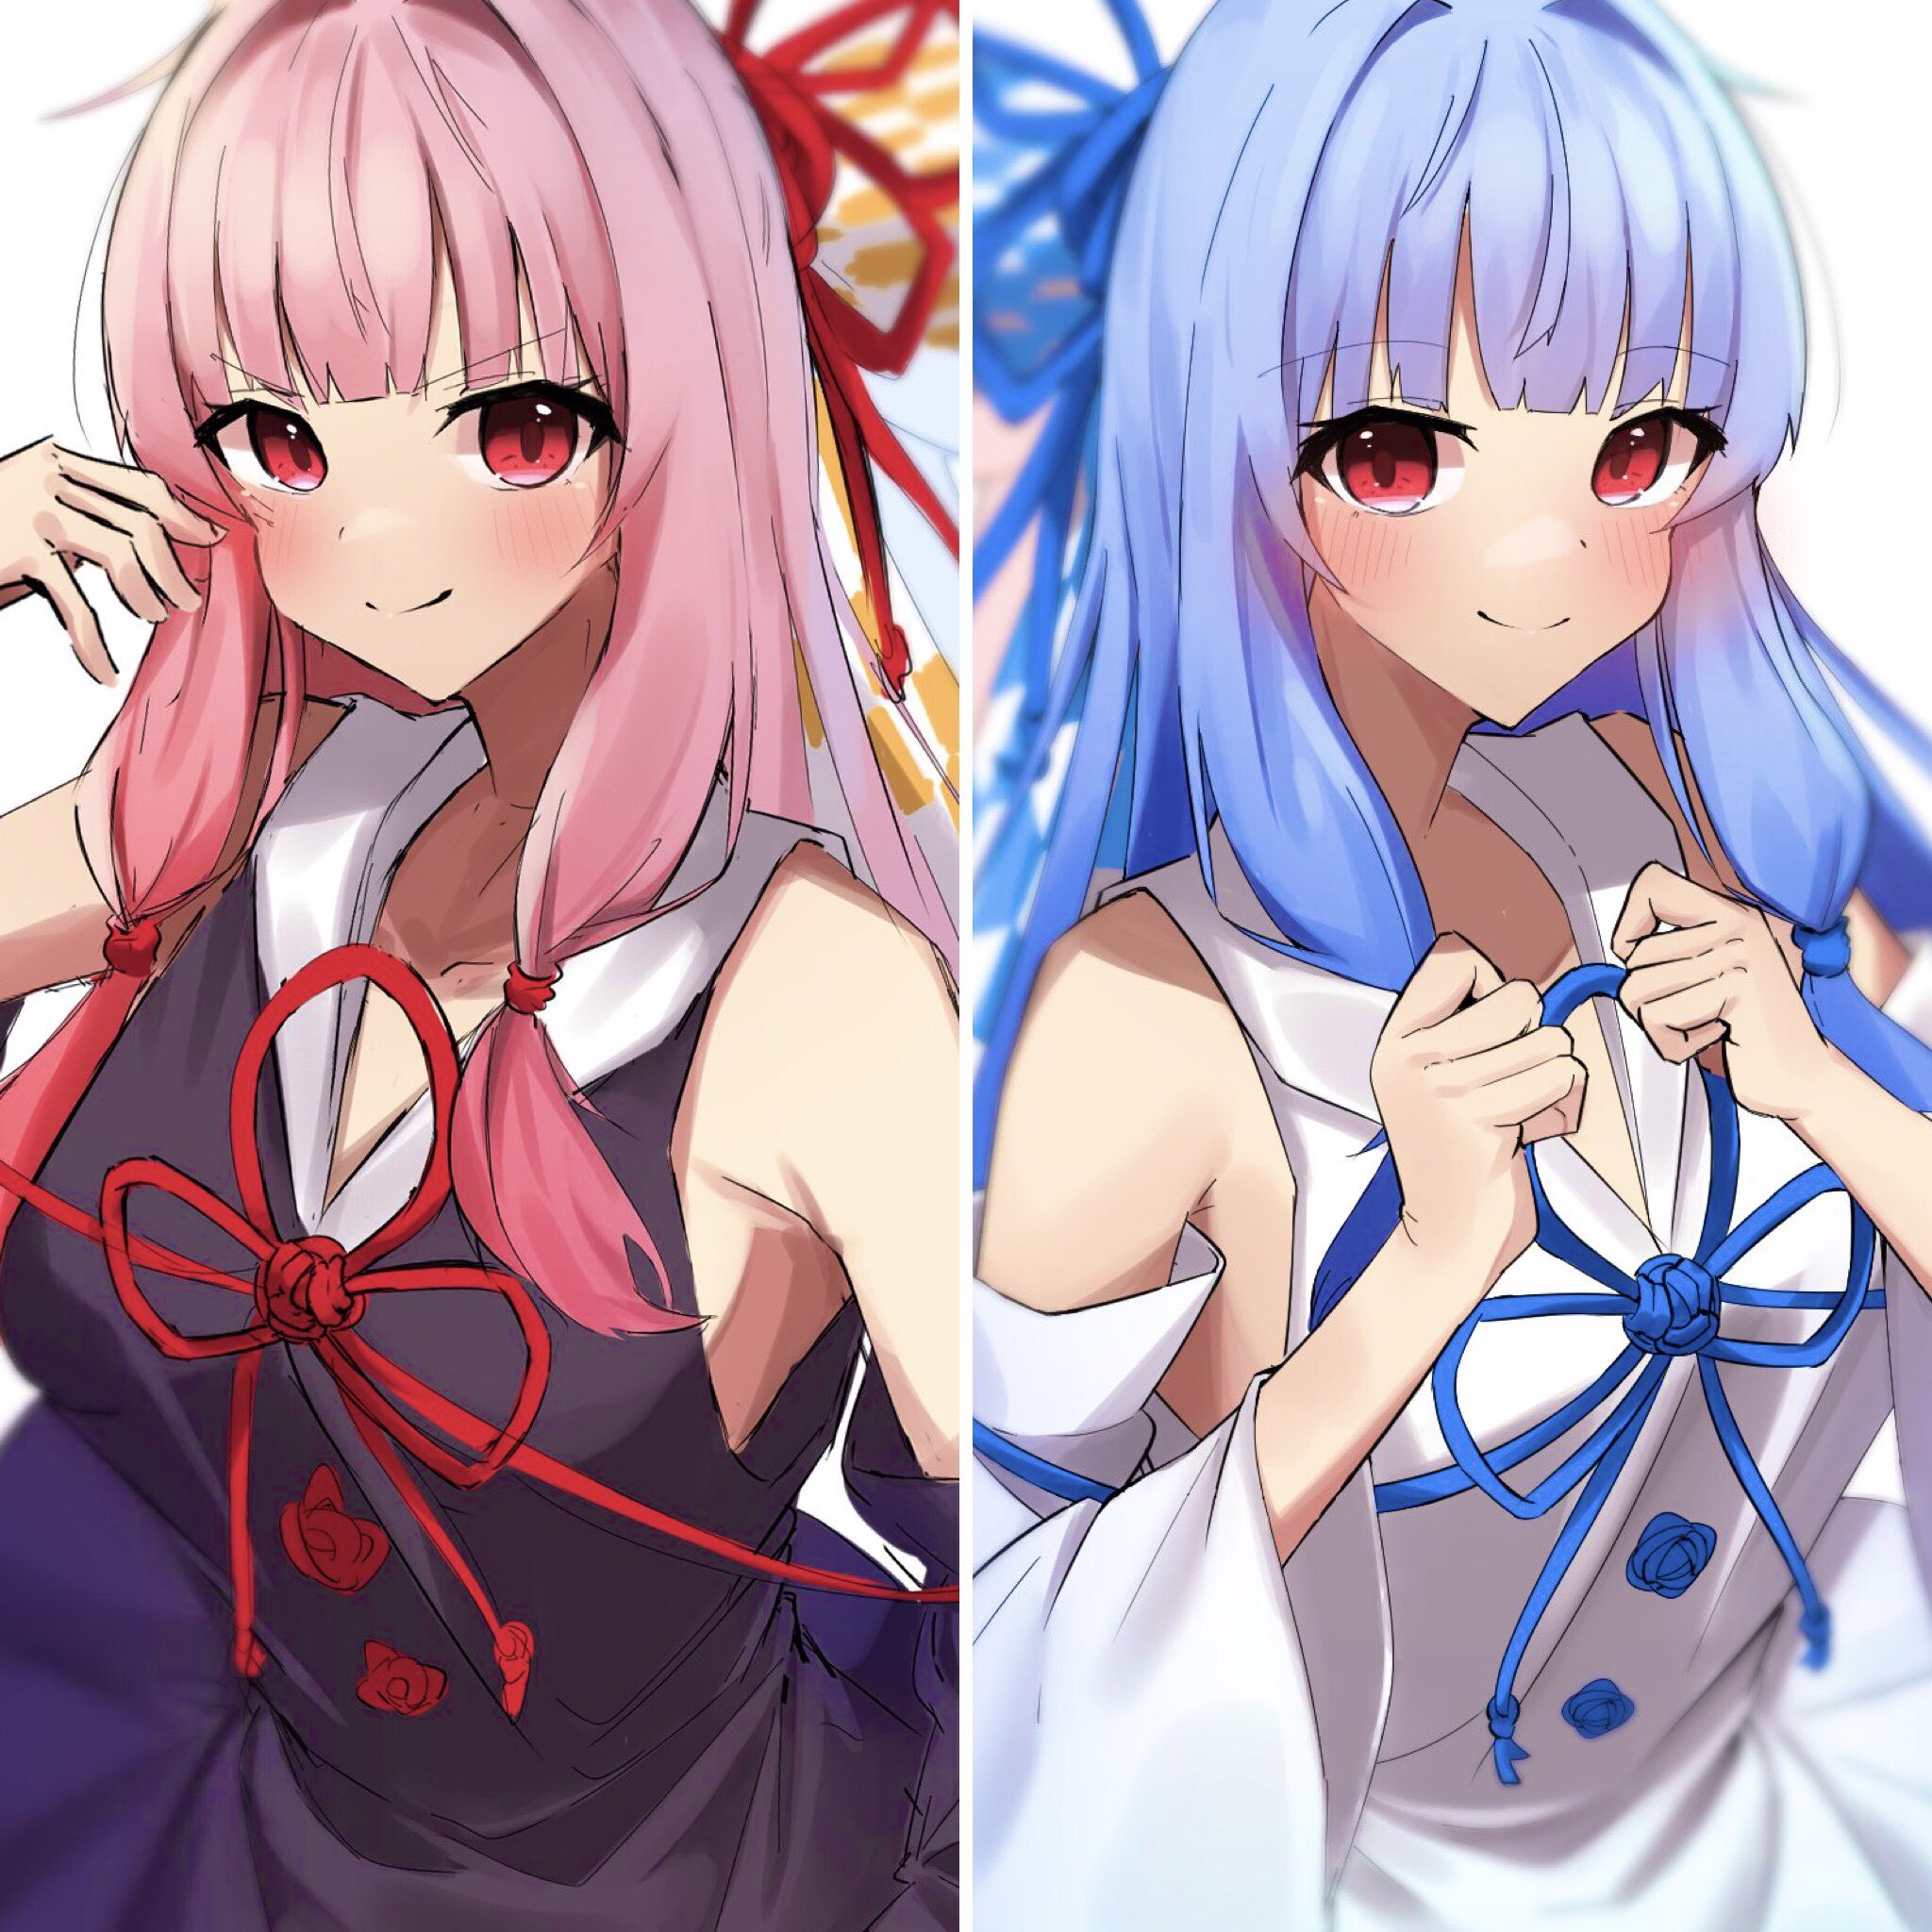 Anime 2048x2048 anime anime girls Voiceroid Kotonoha Akane Kotonoha Aoi long hair pink hair blue hair twins artwork digital art fan art